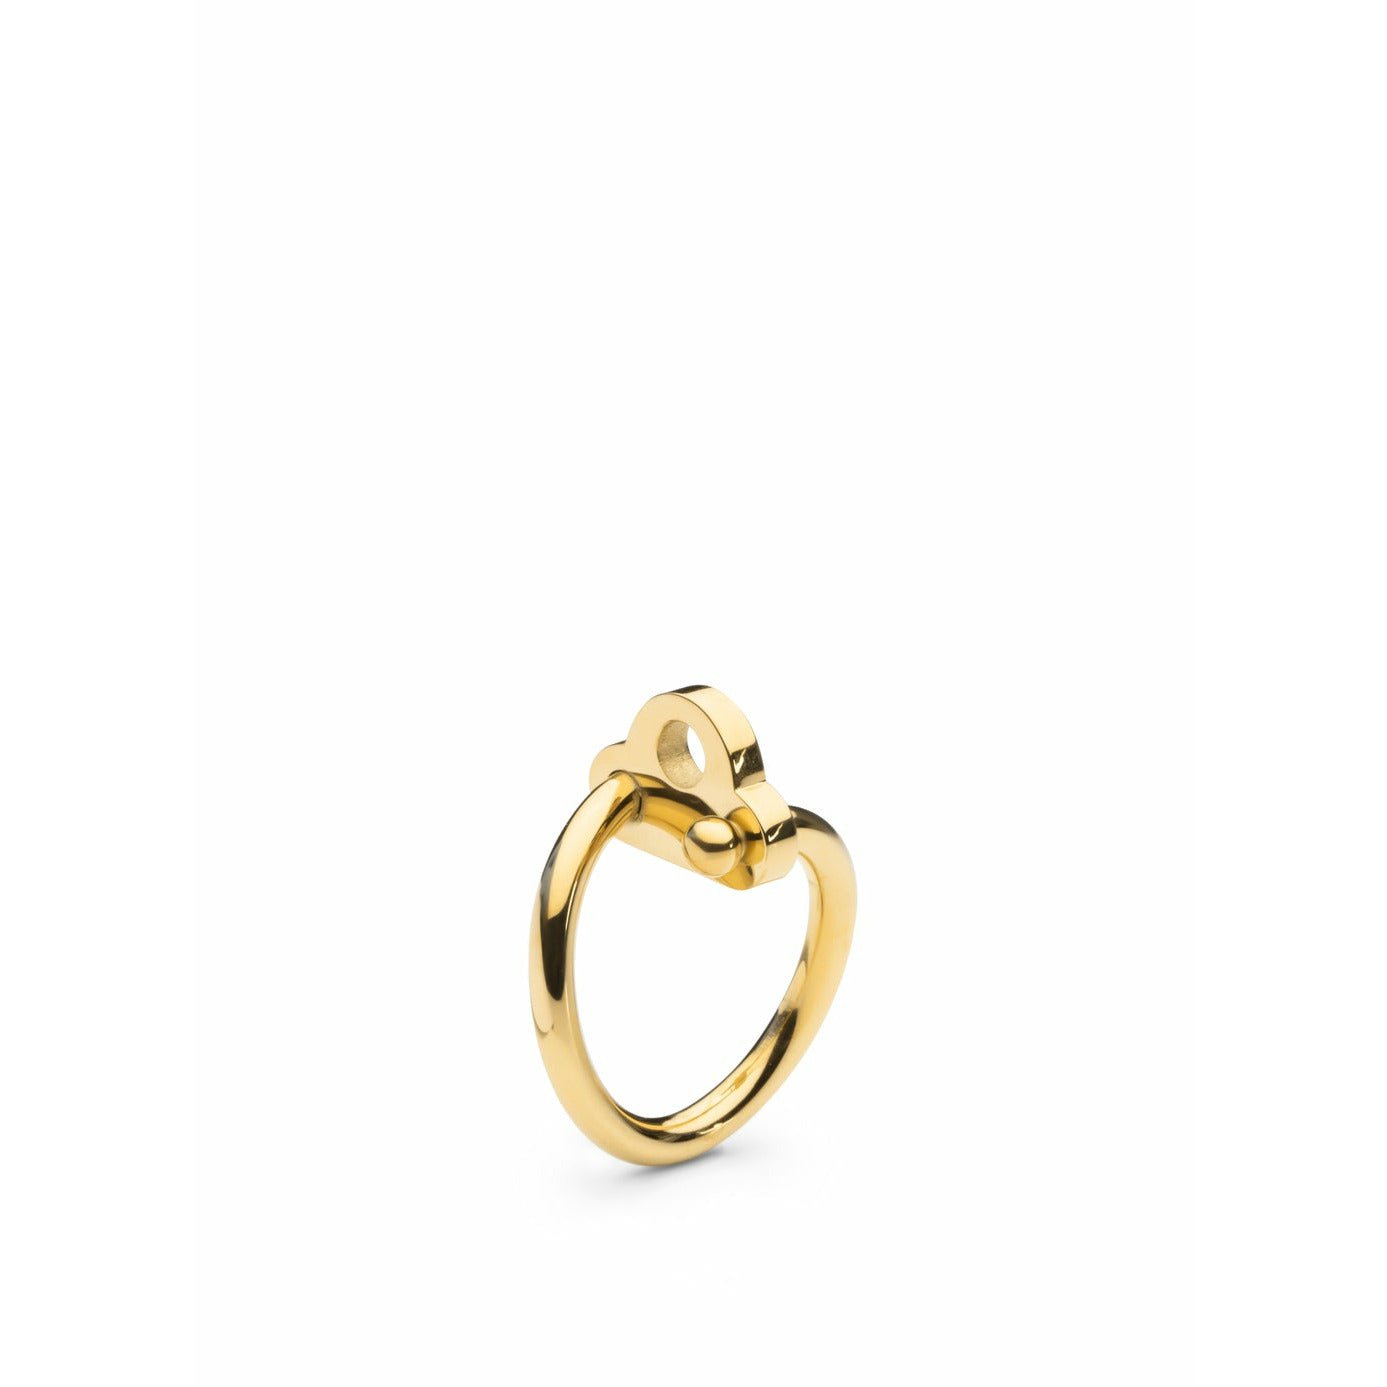 Skultuna klíčový prsten malé zlaté pokovené, Ø1,6 cm